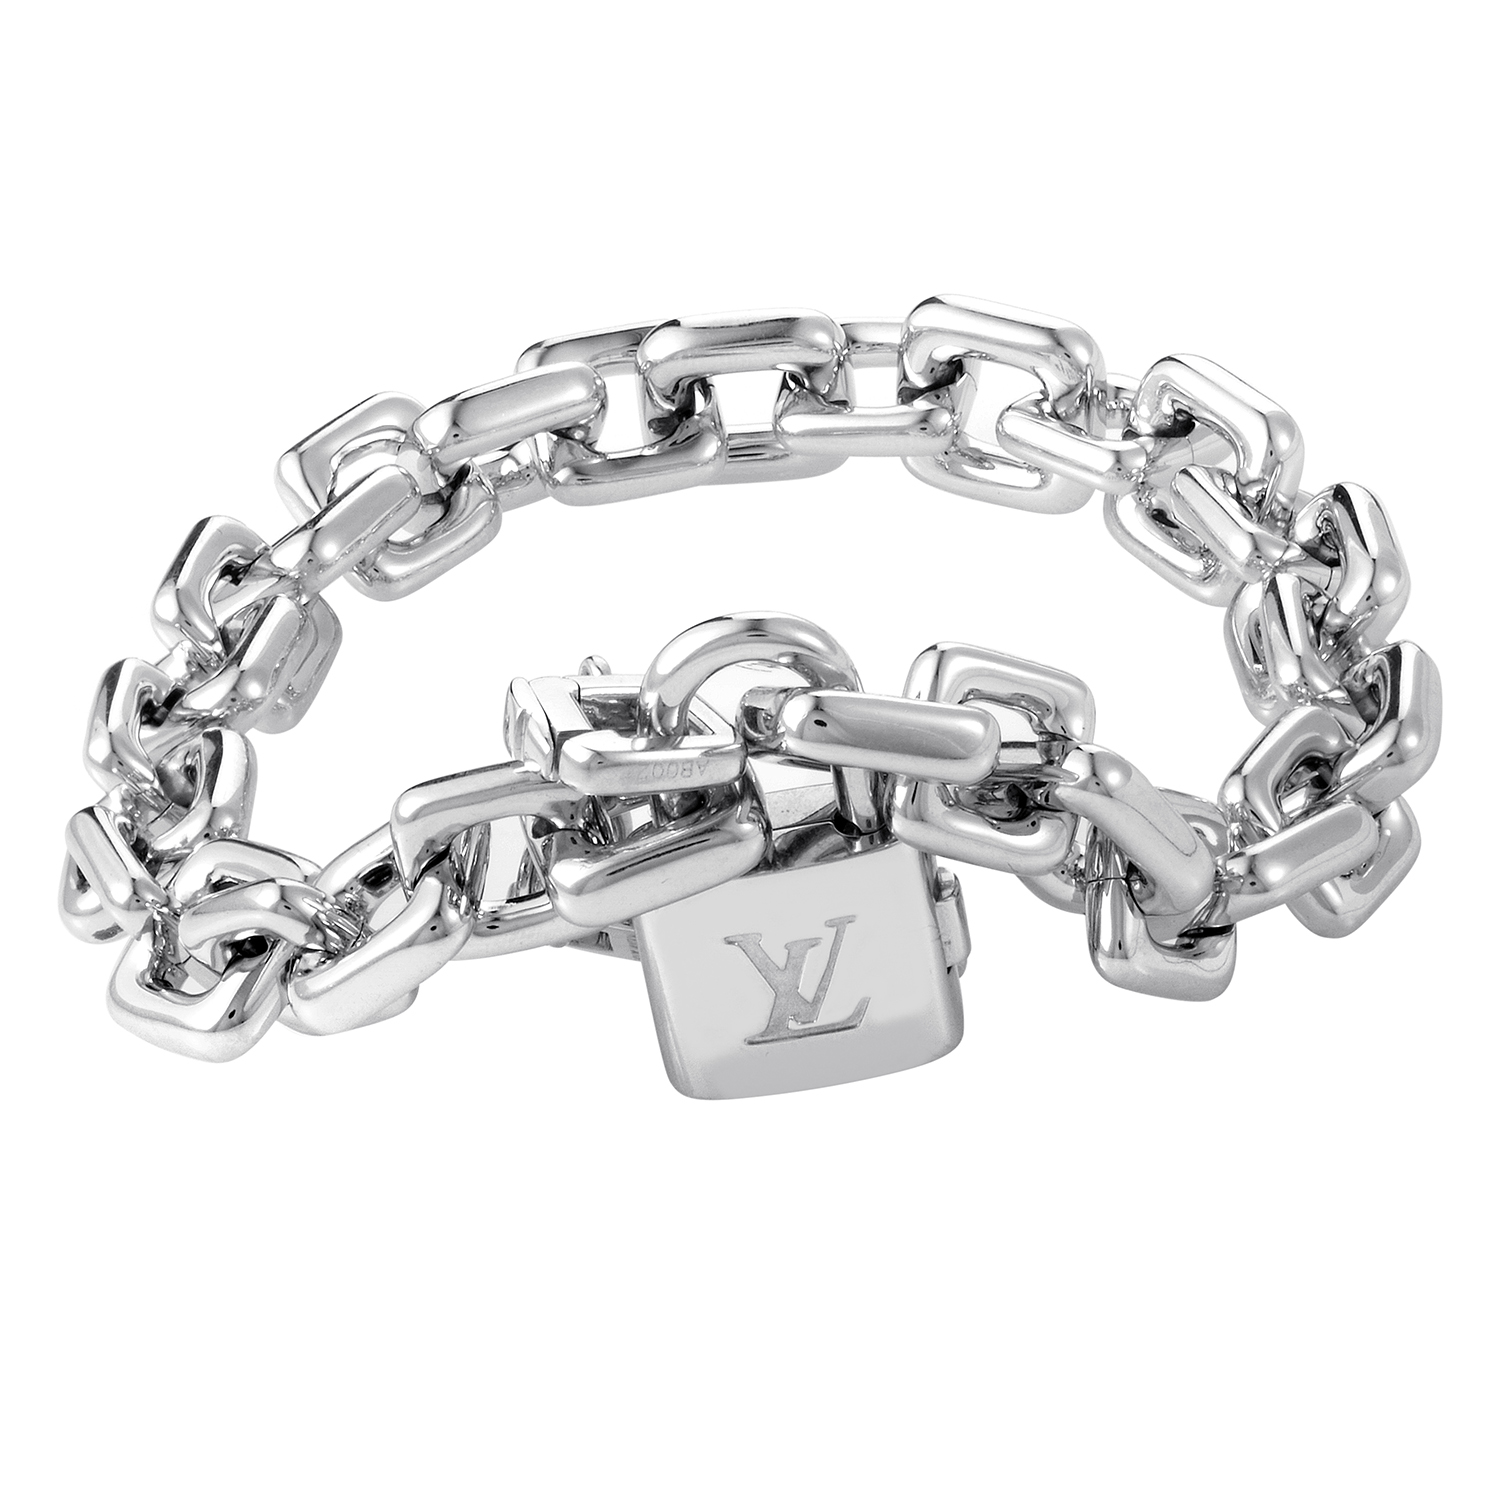 Louis Vuitton 18K White Gold Lock Link Bracelet | eBay